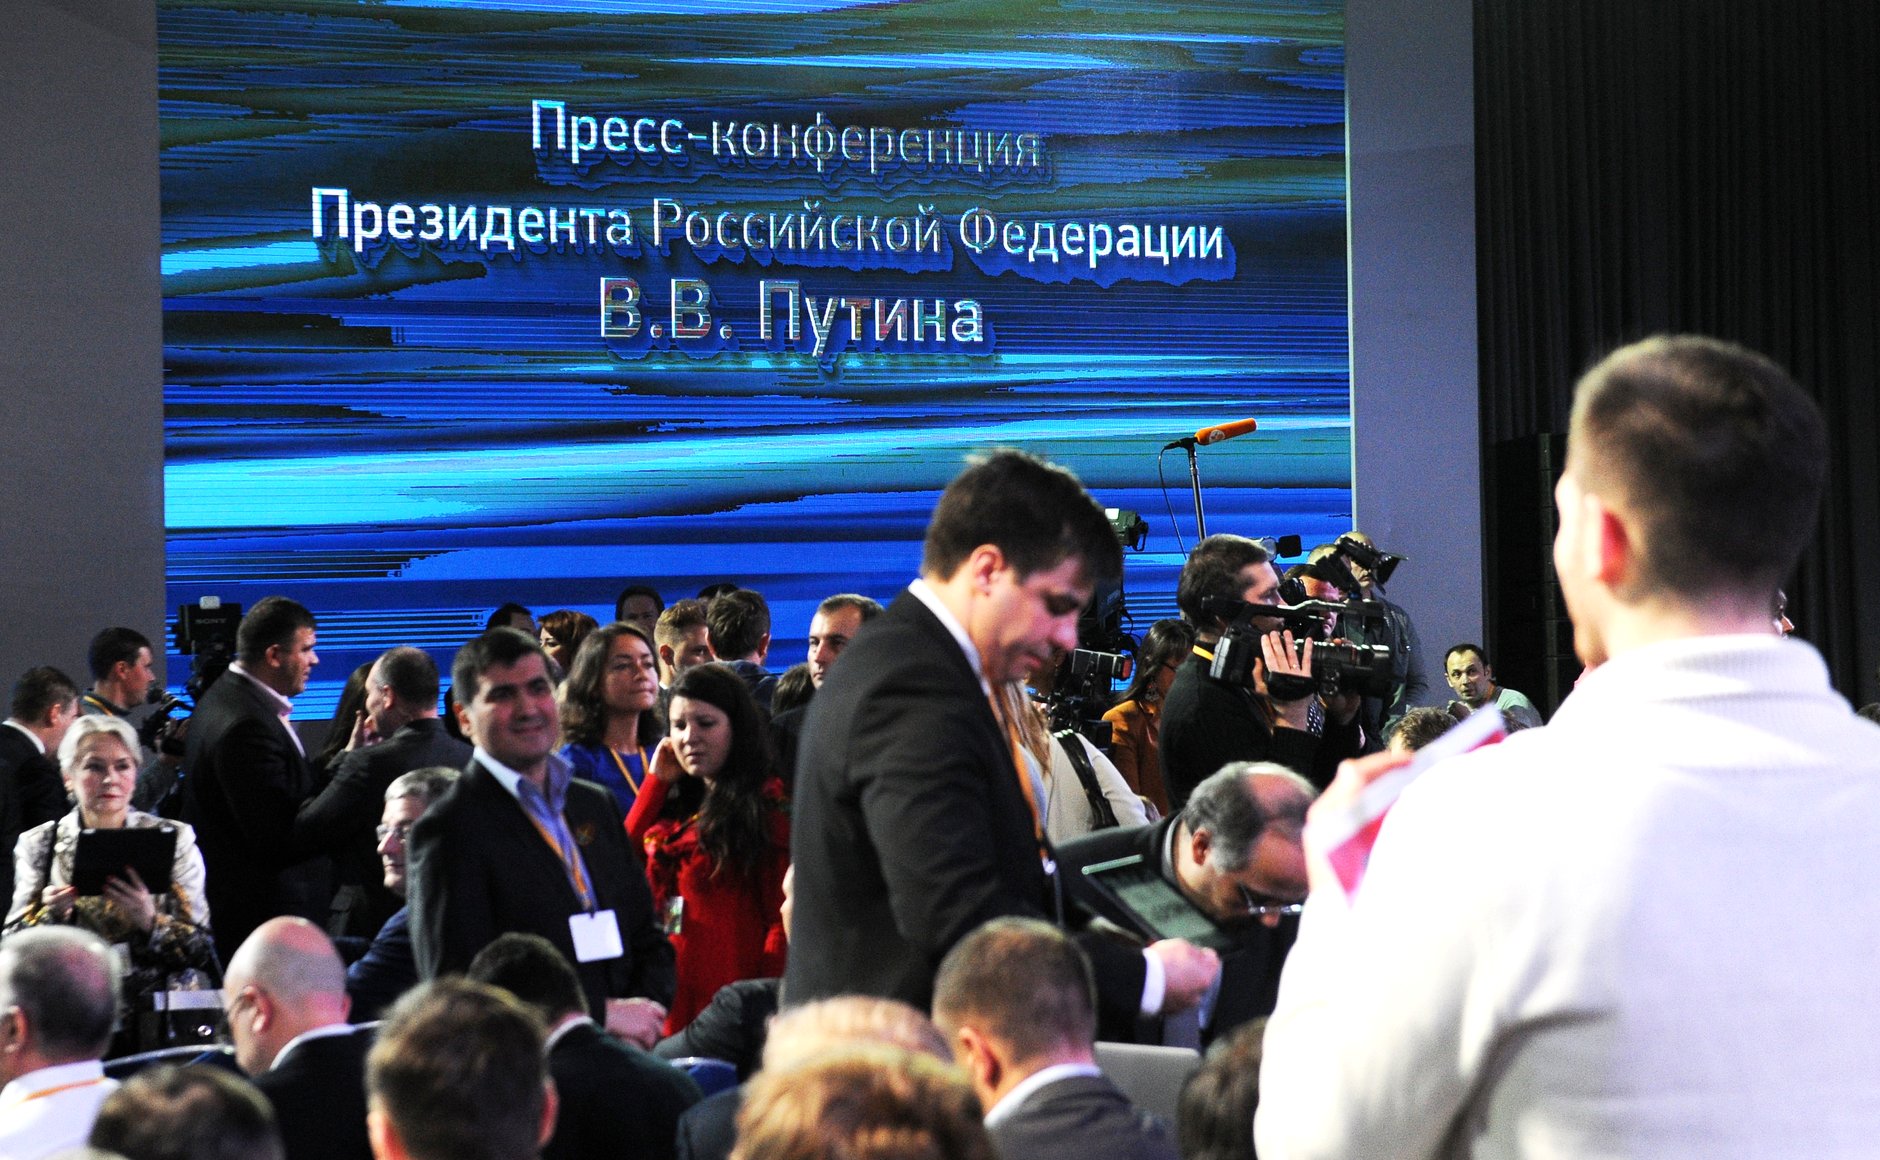 Russian Press Conference